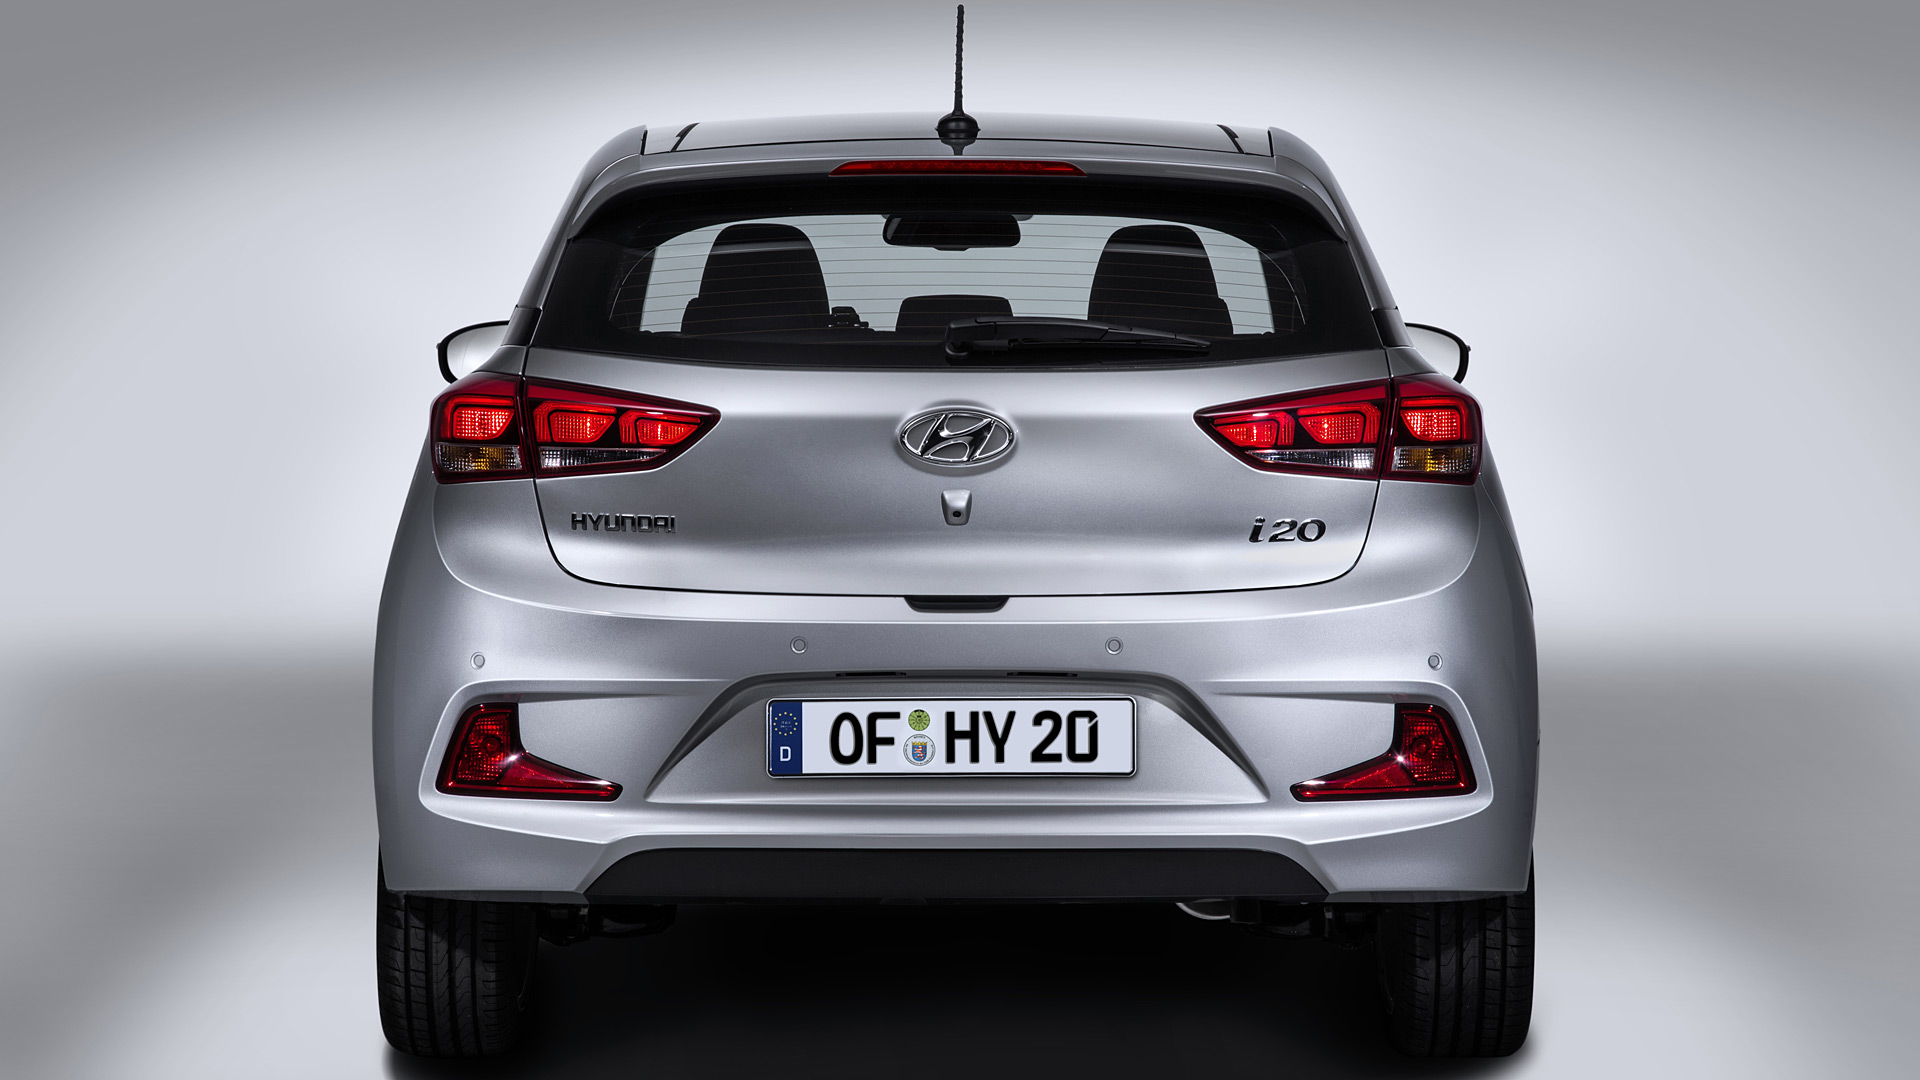  2015 Hyundai i20 Coupe Wallpaper.